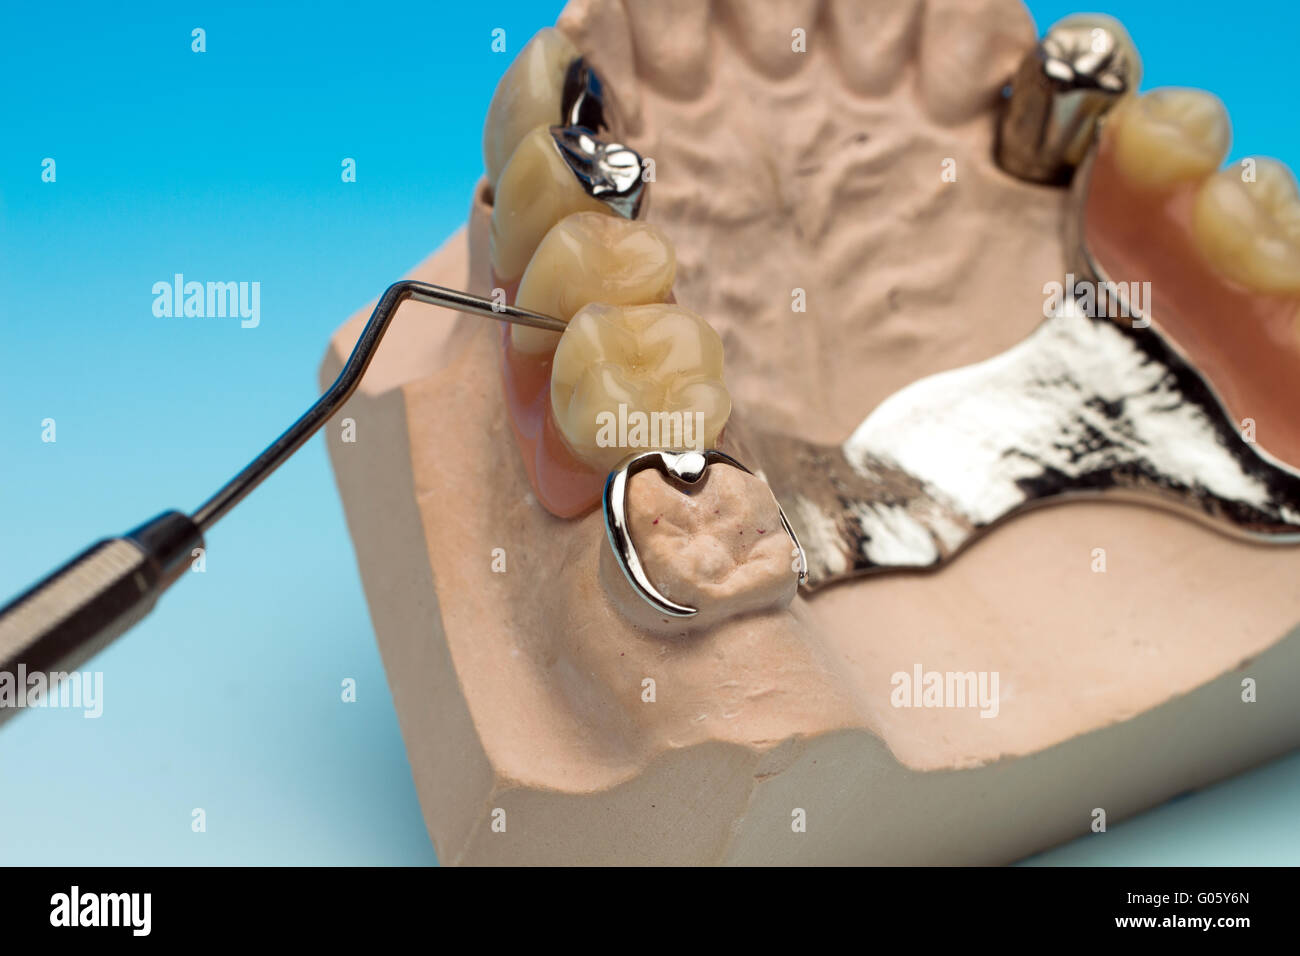 Plaster cast with dental bridge and probe Stock Photo